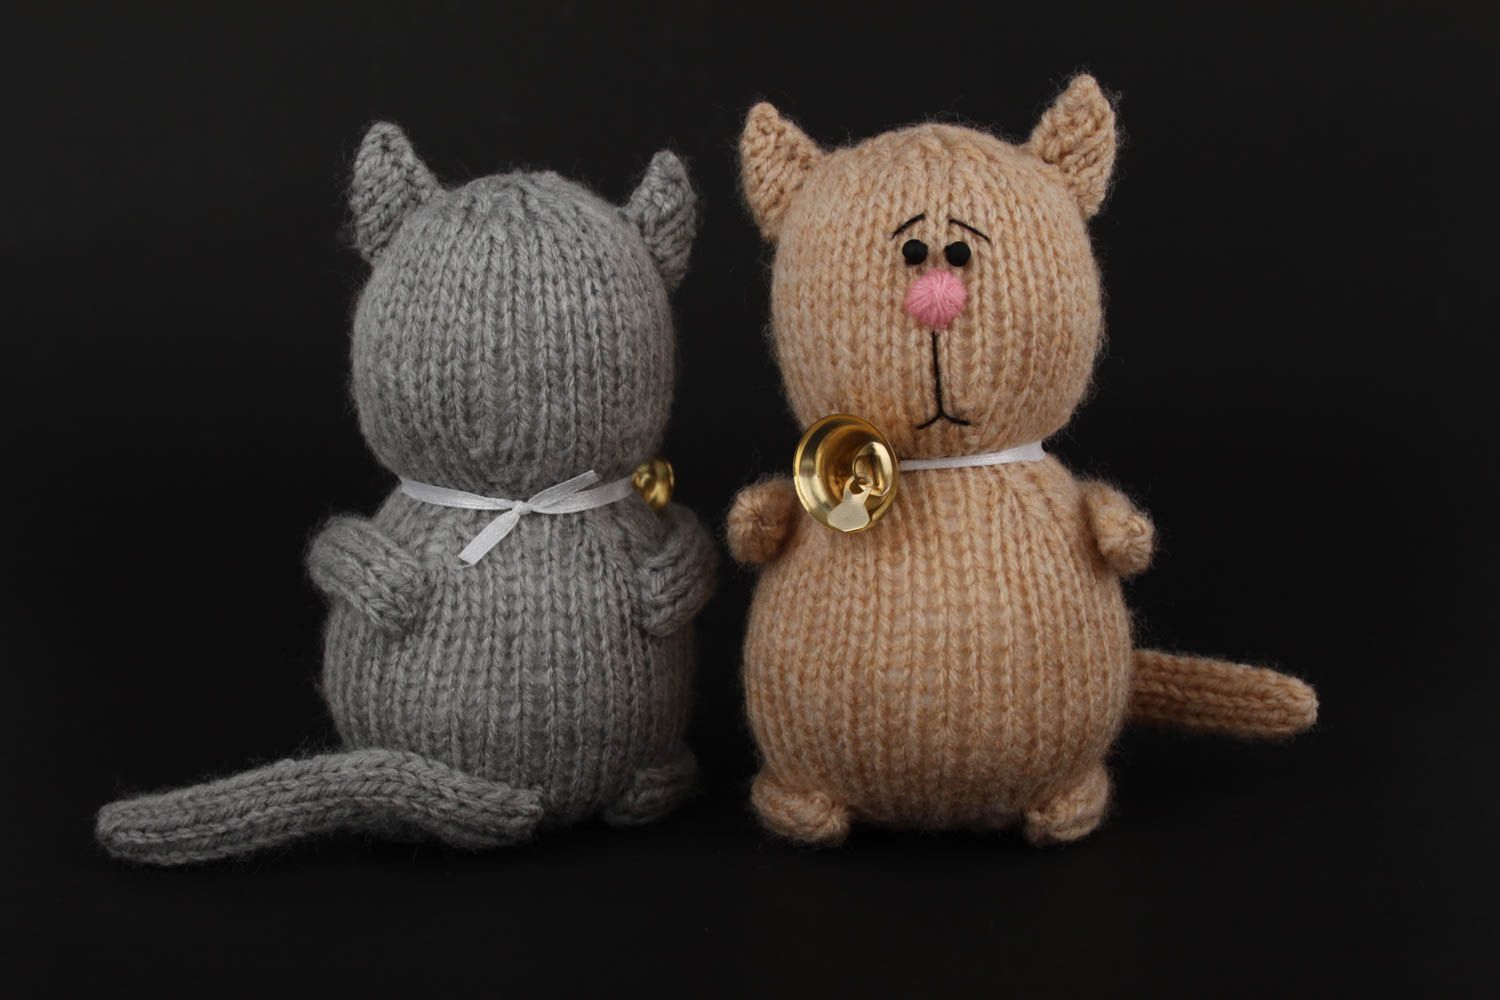 Handmade cute knitted toys 2 beautiful soft toys cats nursery decor ideas photo 3